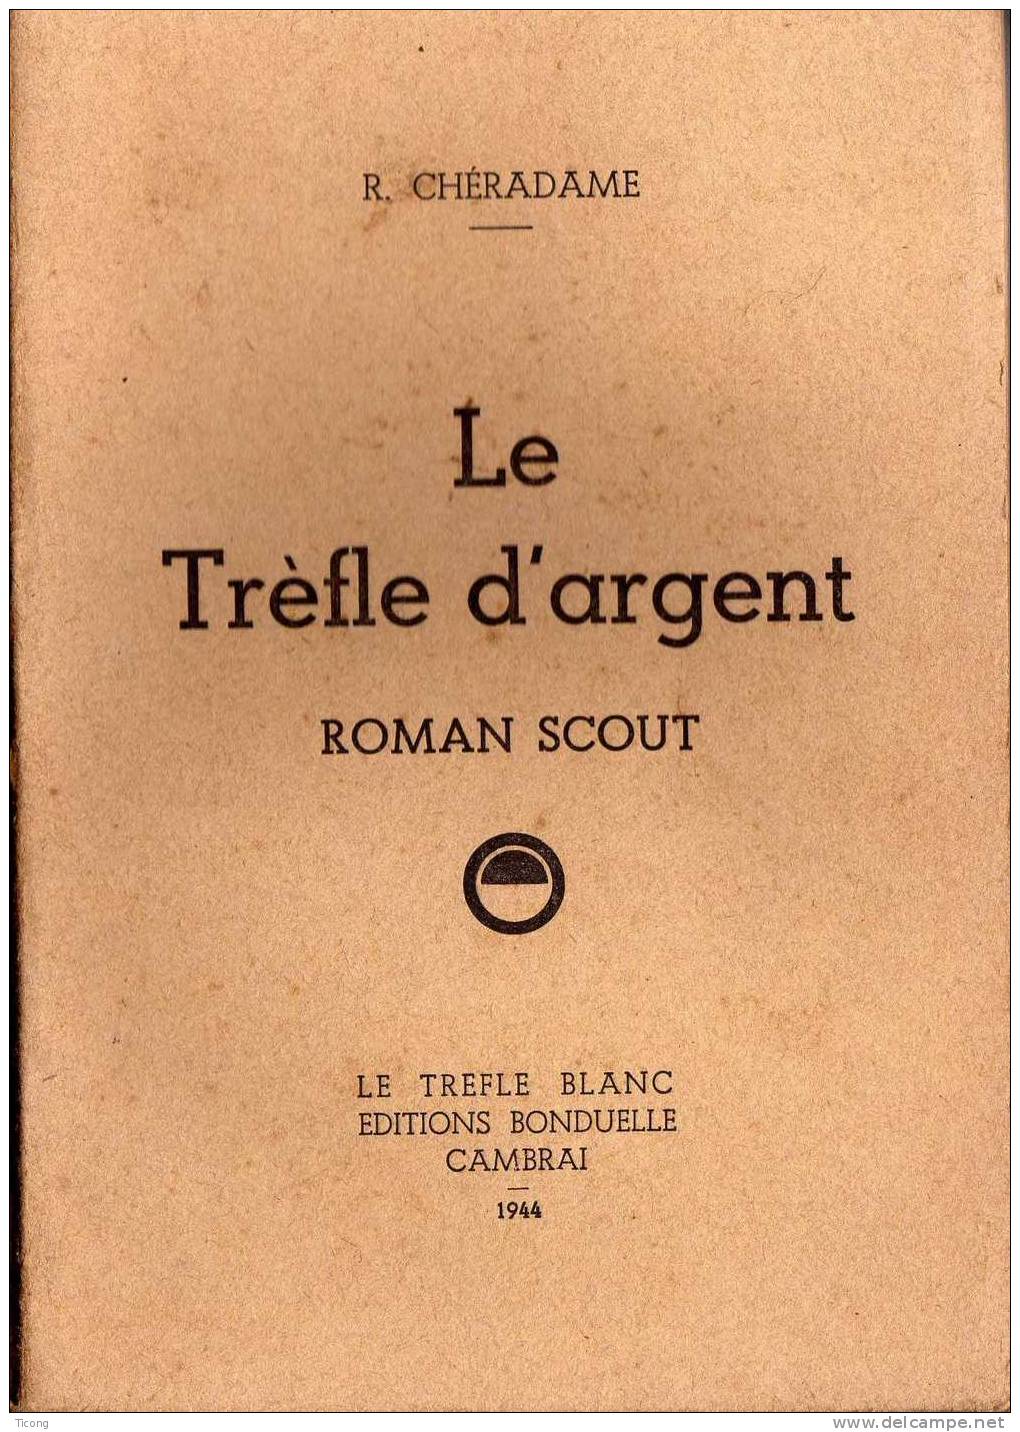 SCOUTISME- TREFLE D ARGENT ROMAN SCOUT, R CHERADAME    - 1ERE EDITION 1944  - LE TREFLE BLANC EDITIONS BONDUELLE CAMBRAI - Pfadfinder-Bewegung